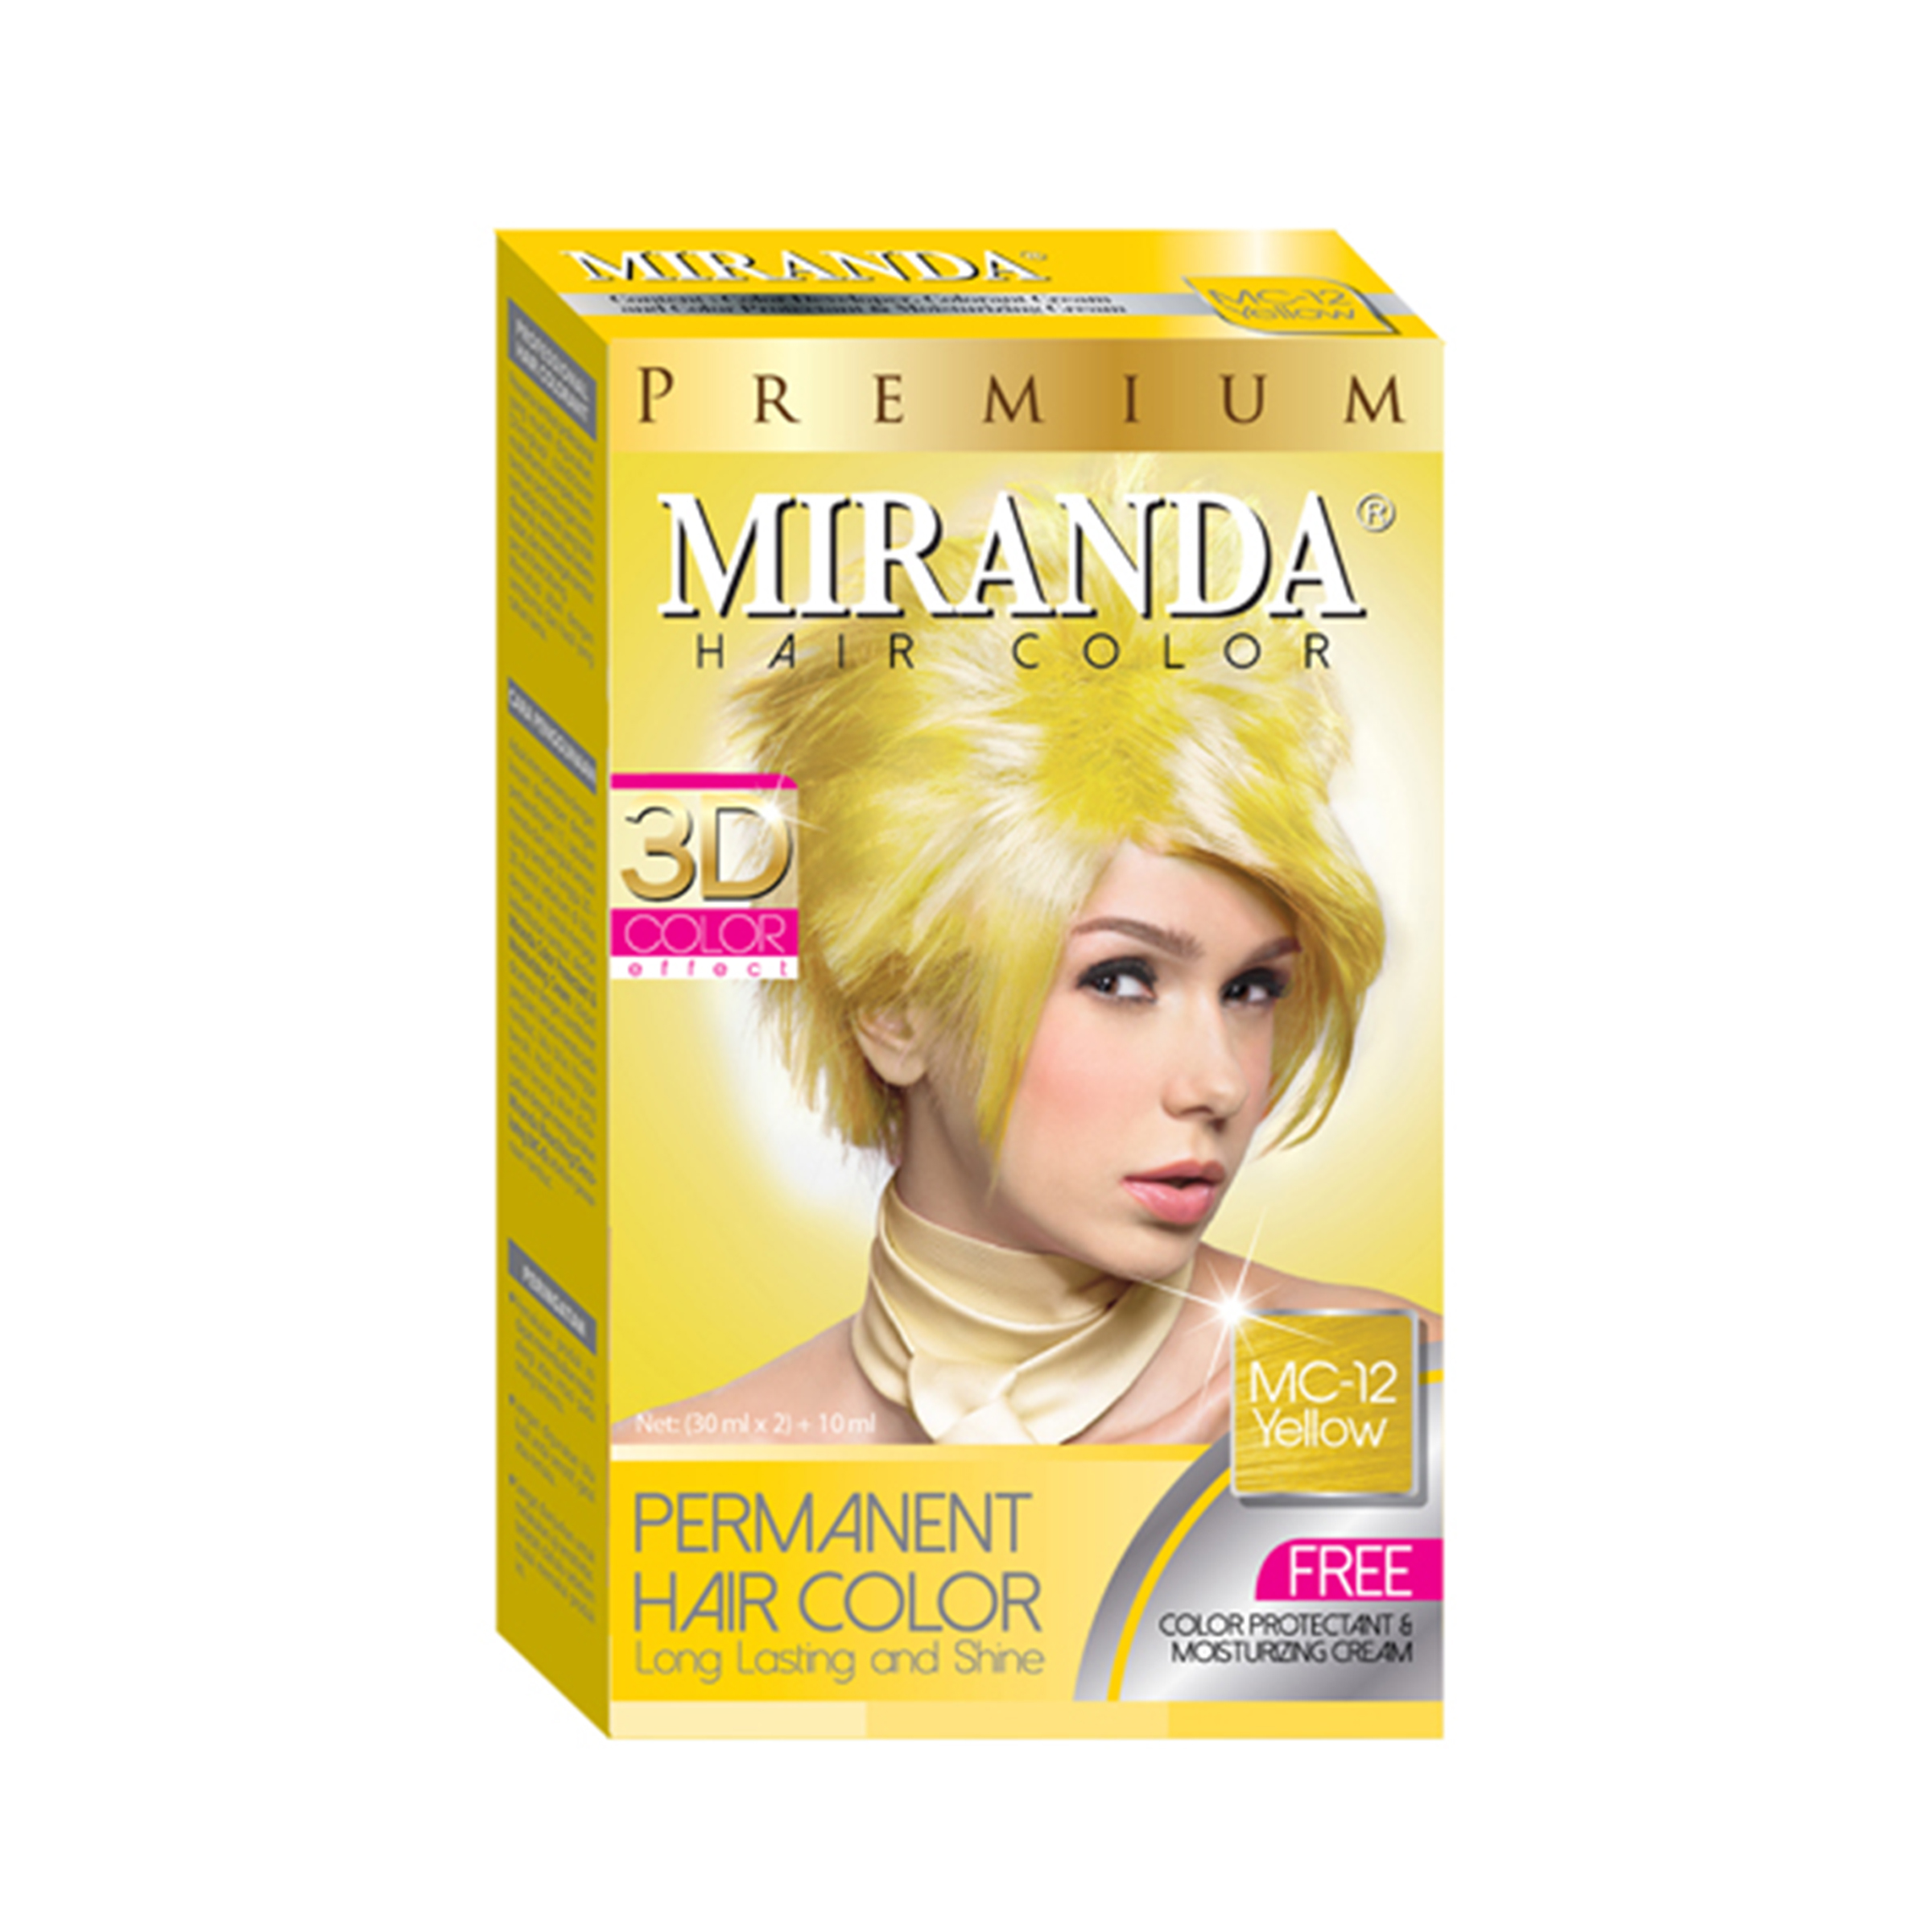 Miranda Premium Hair Color MC-12 Yellow 30 ml / Cat Rambut Warna Kuning